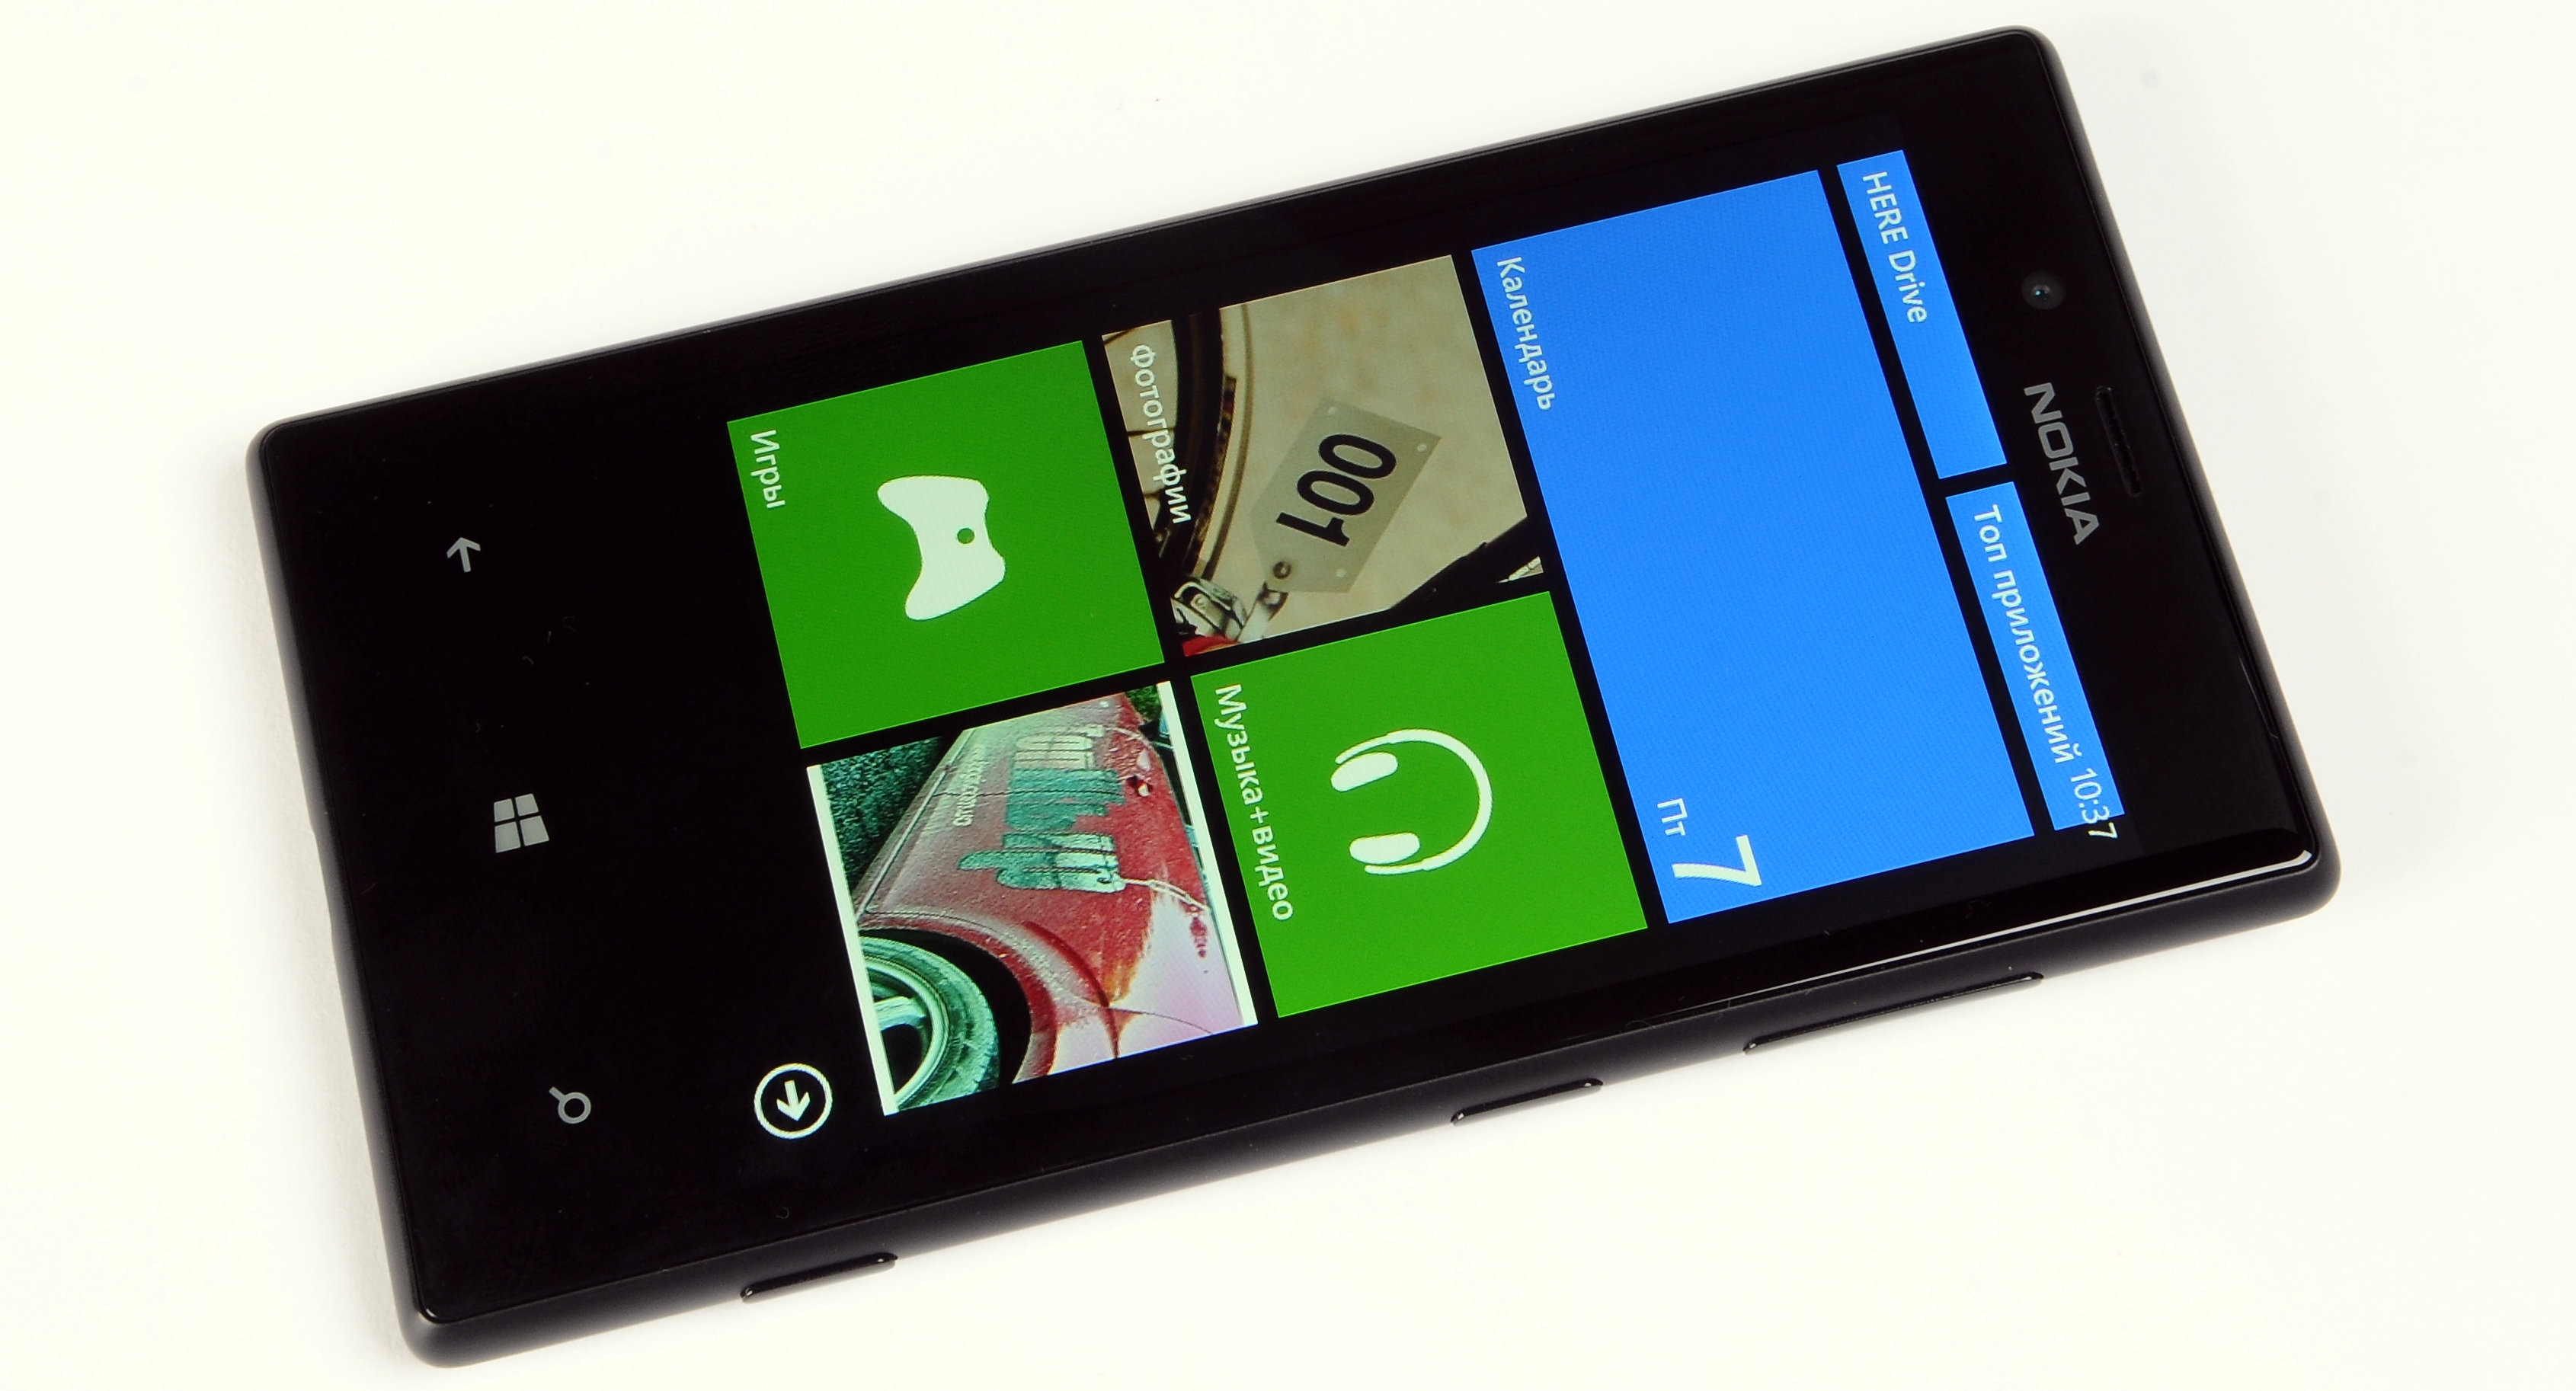 Скриншот экрана на Nokia Lumia - Ответы Windows Phone